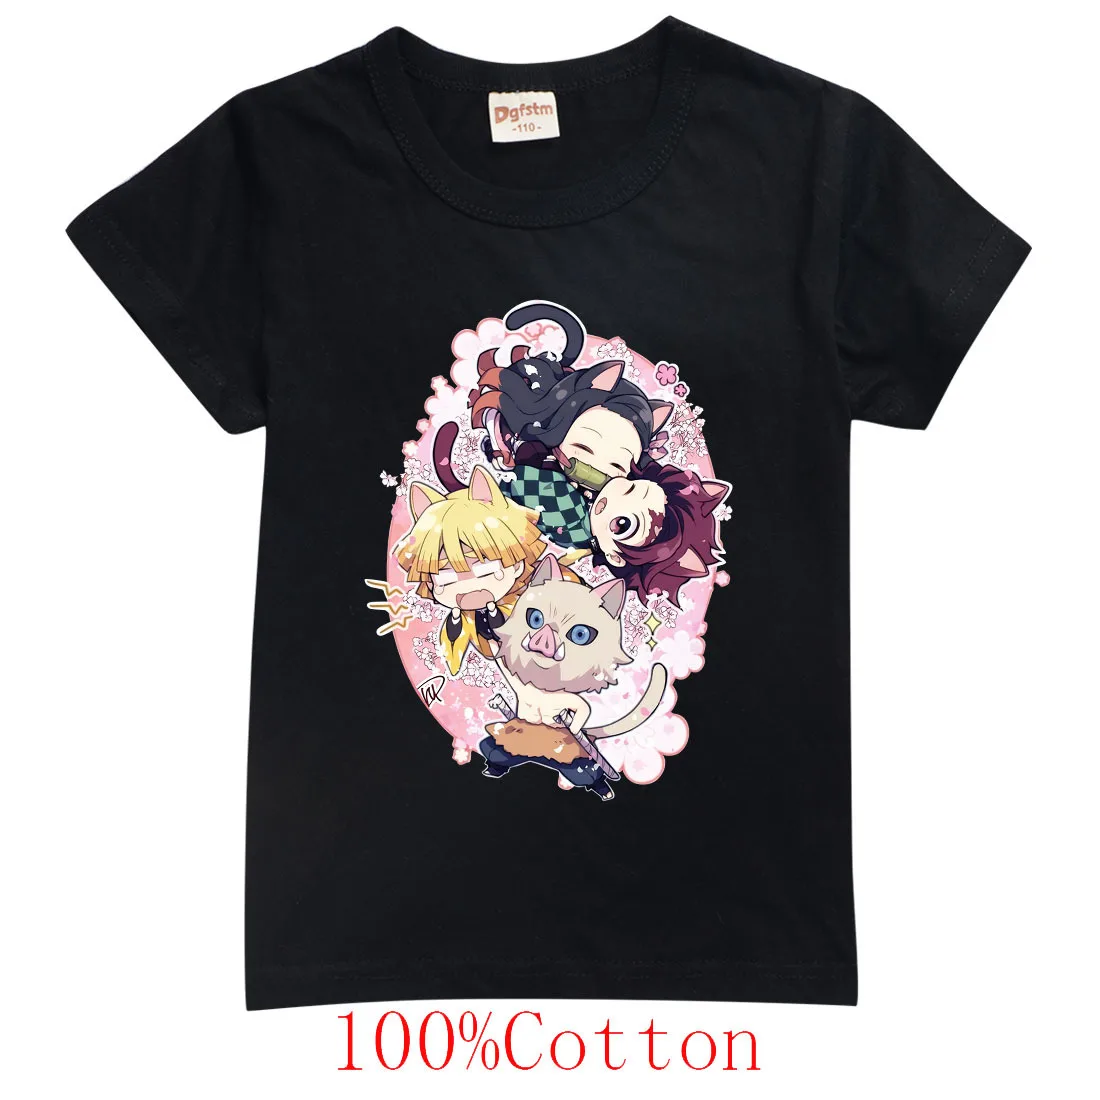 

Anime Demon Slayer Boy T-shirt Summer Kawaii Shirt Cartoon Children Casual Clothes New Kids Fashion Short sleeveTop Tee 2-15Y